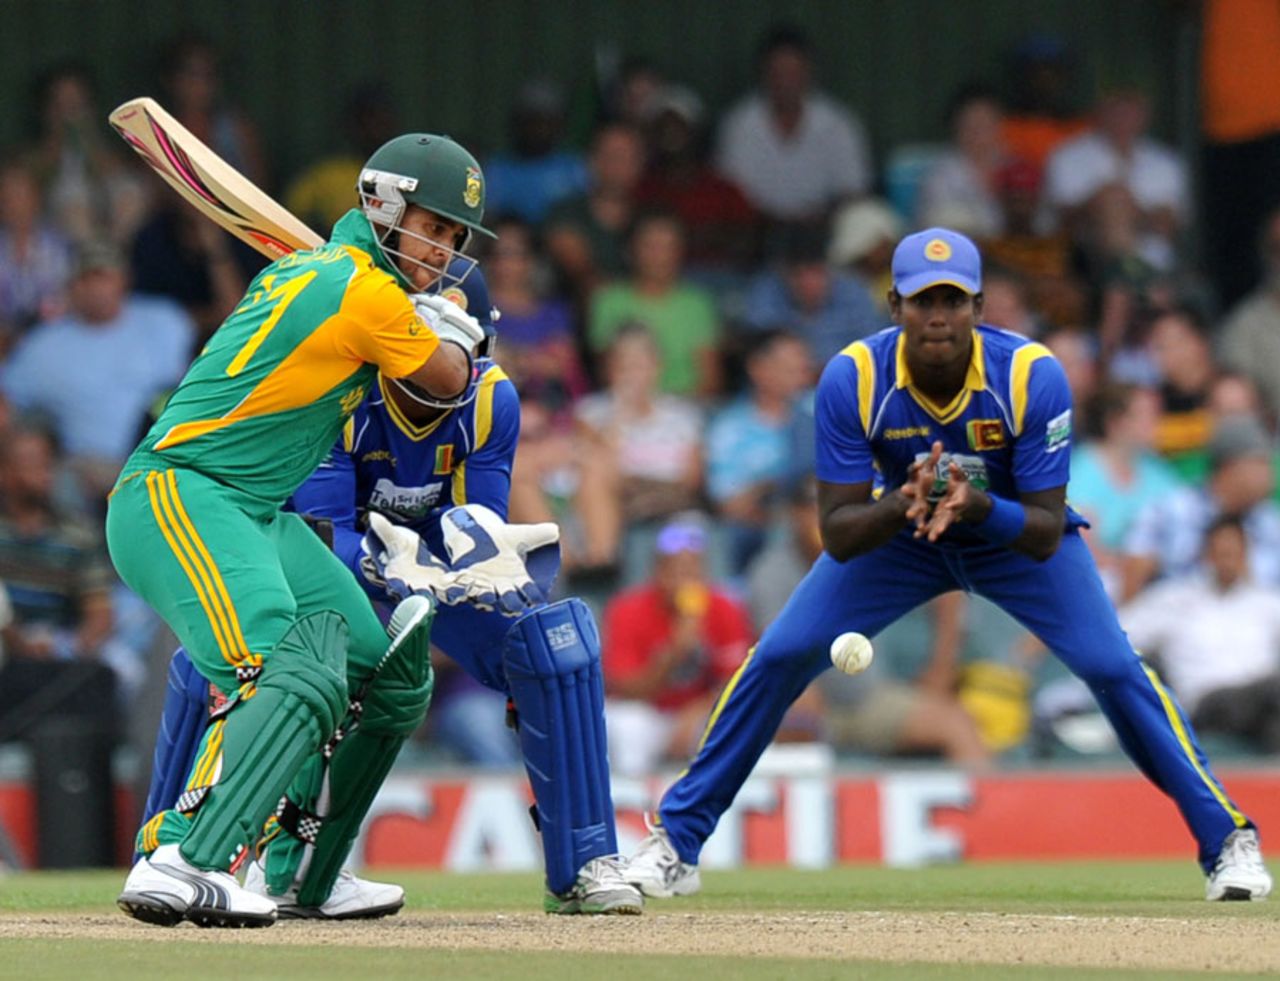 JP Duminy prepares to cut, South Africa v Sri Lanka, 2nd ODI, East London, January 14, 2012